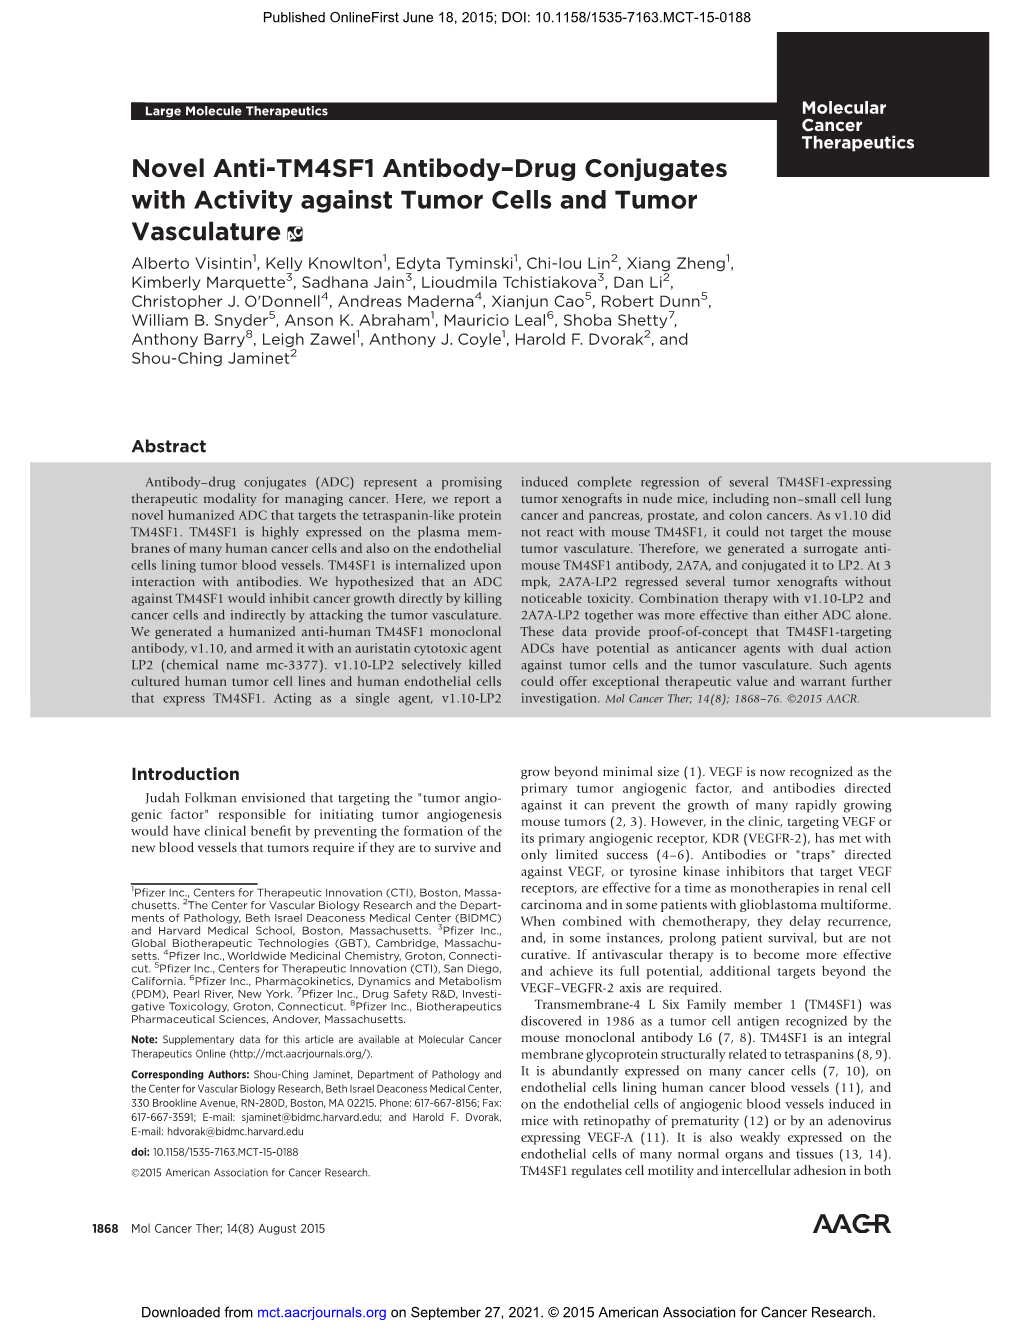 Novel Anti-TM4SF1 Antibody–Drug Conjugates with Activity Against